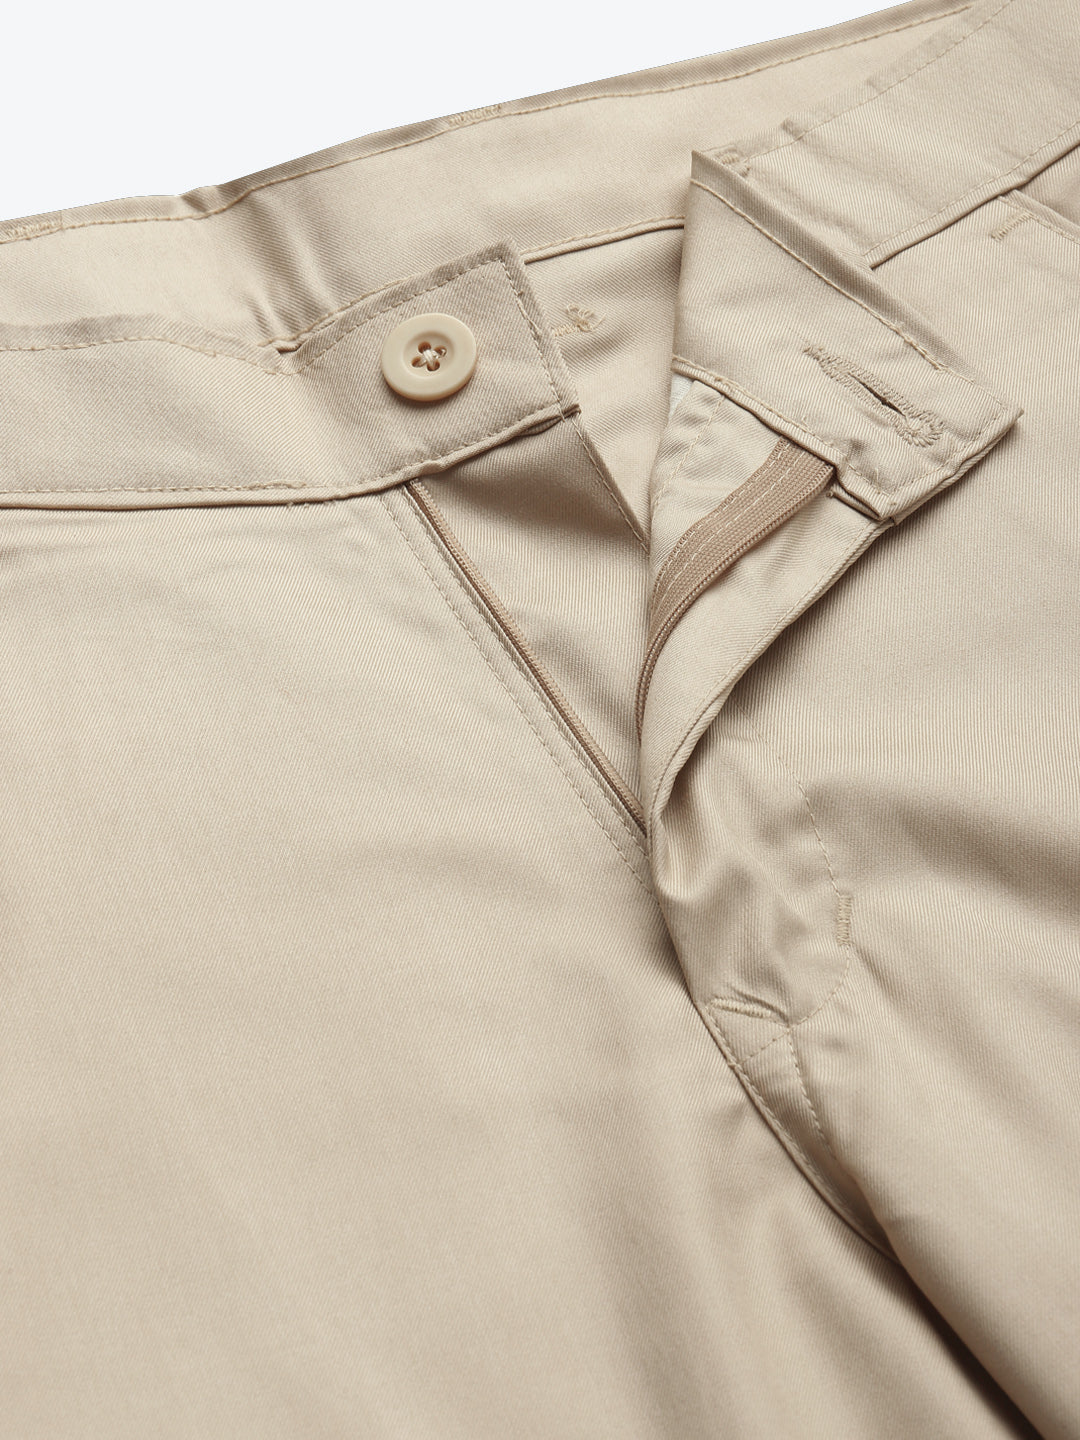 Men's Cotton Blend Beige Solid Casual Trouser - Sojanya